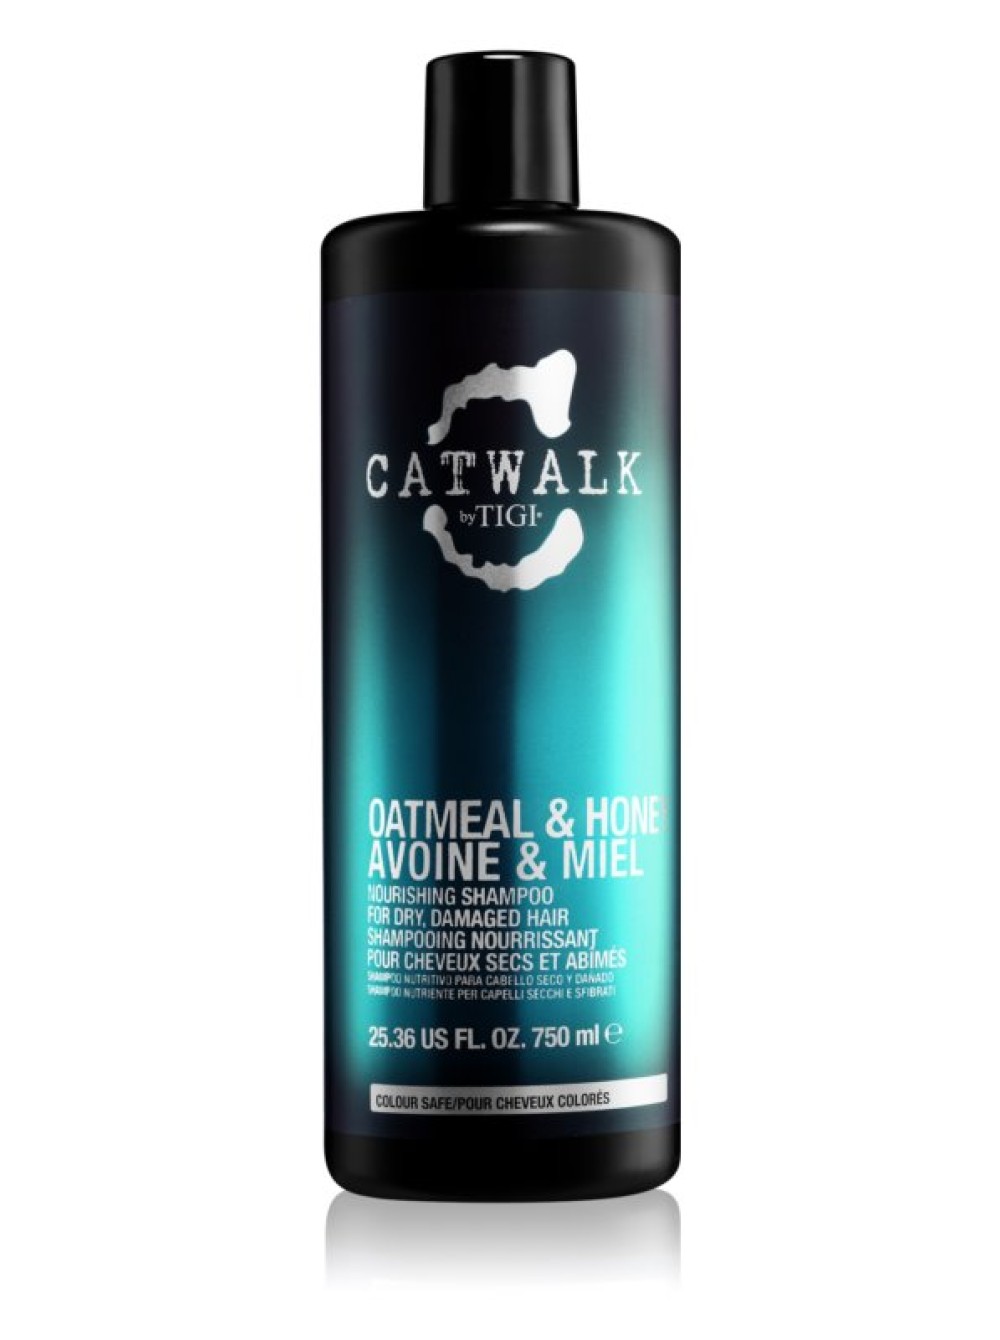 Tigi Catwalk шампунь. Catwalk Oatmeal Honey шампунь восстанавливающий 300 мл. Inga Catwalk. Тиджи кондиционер для волос.